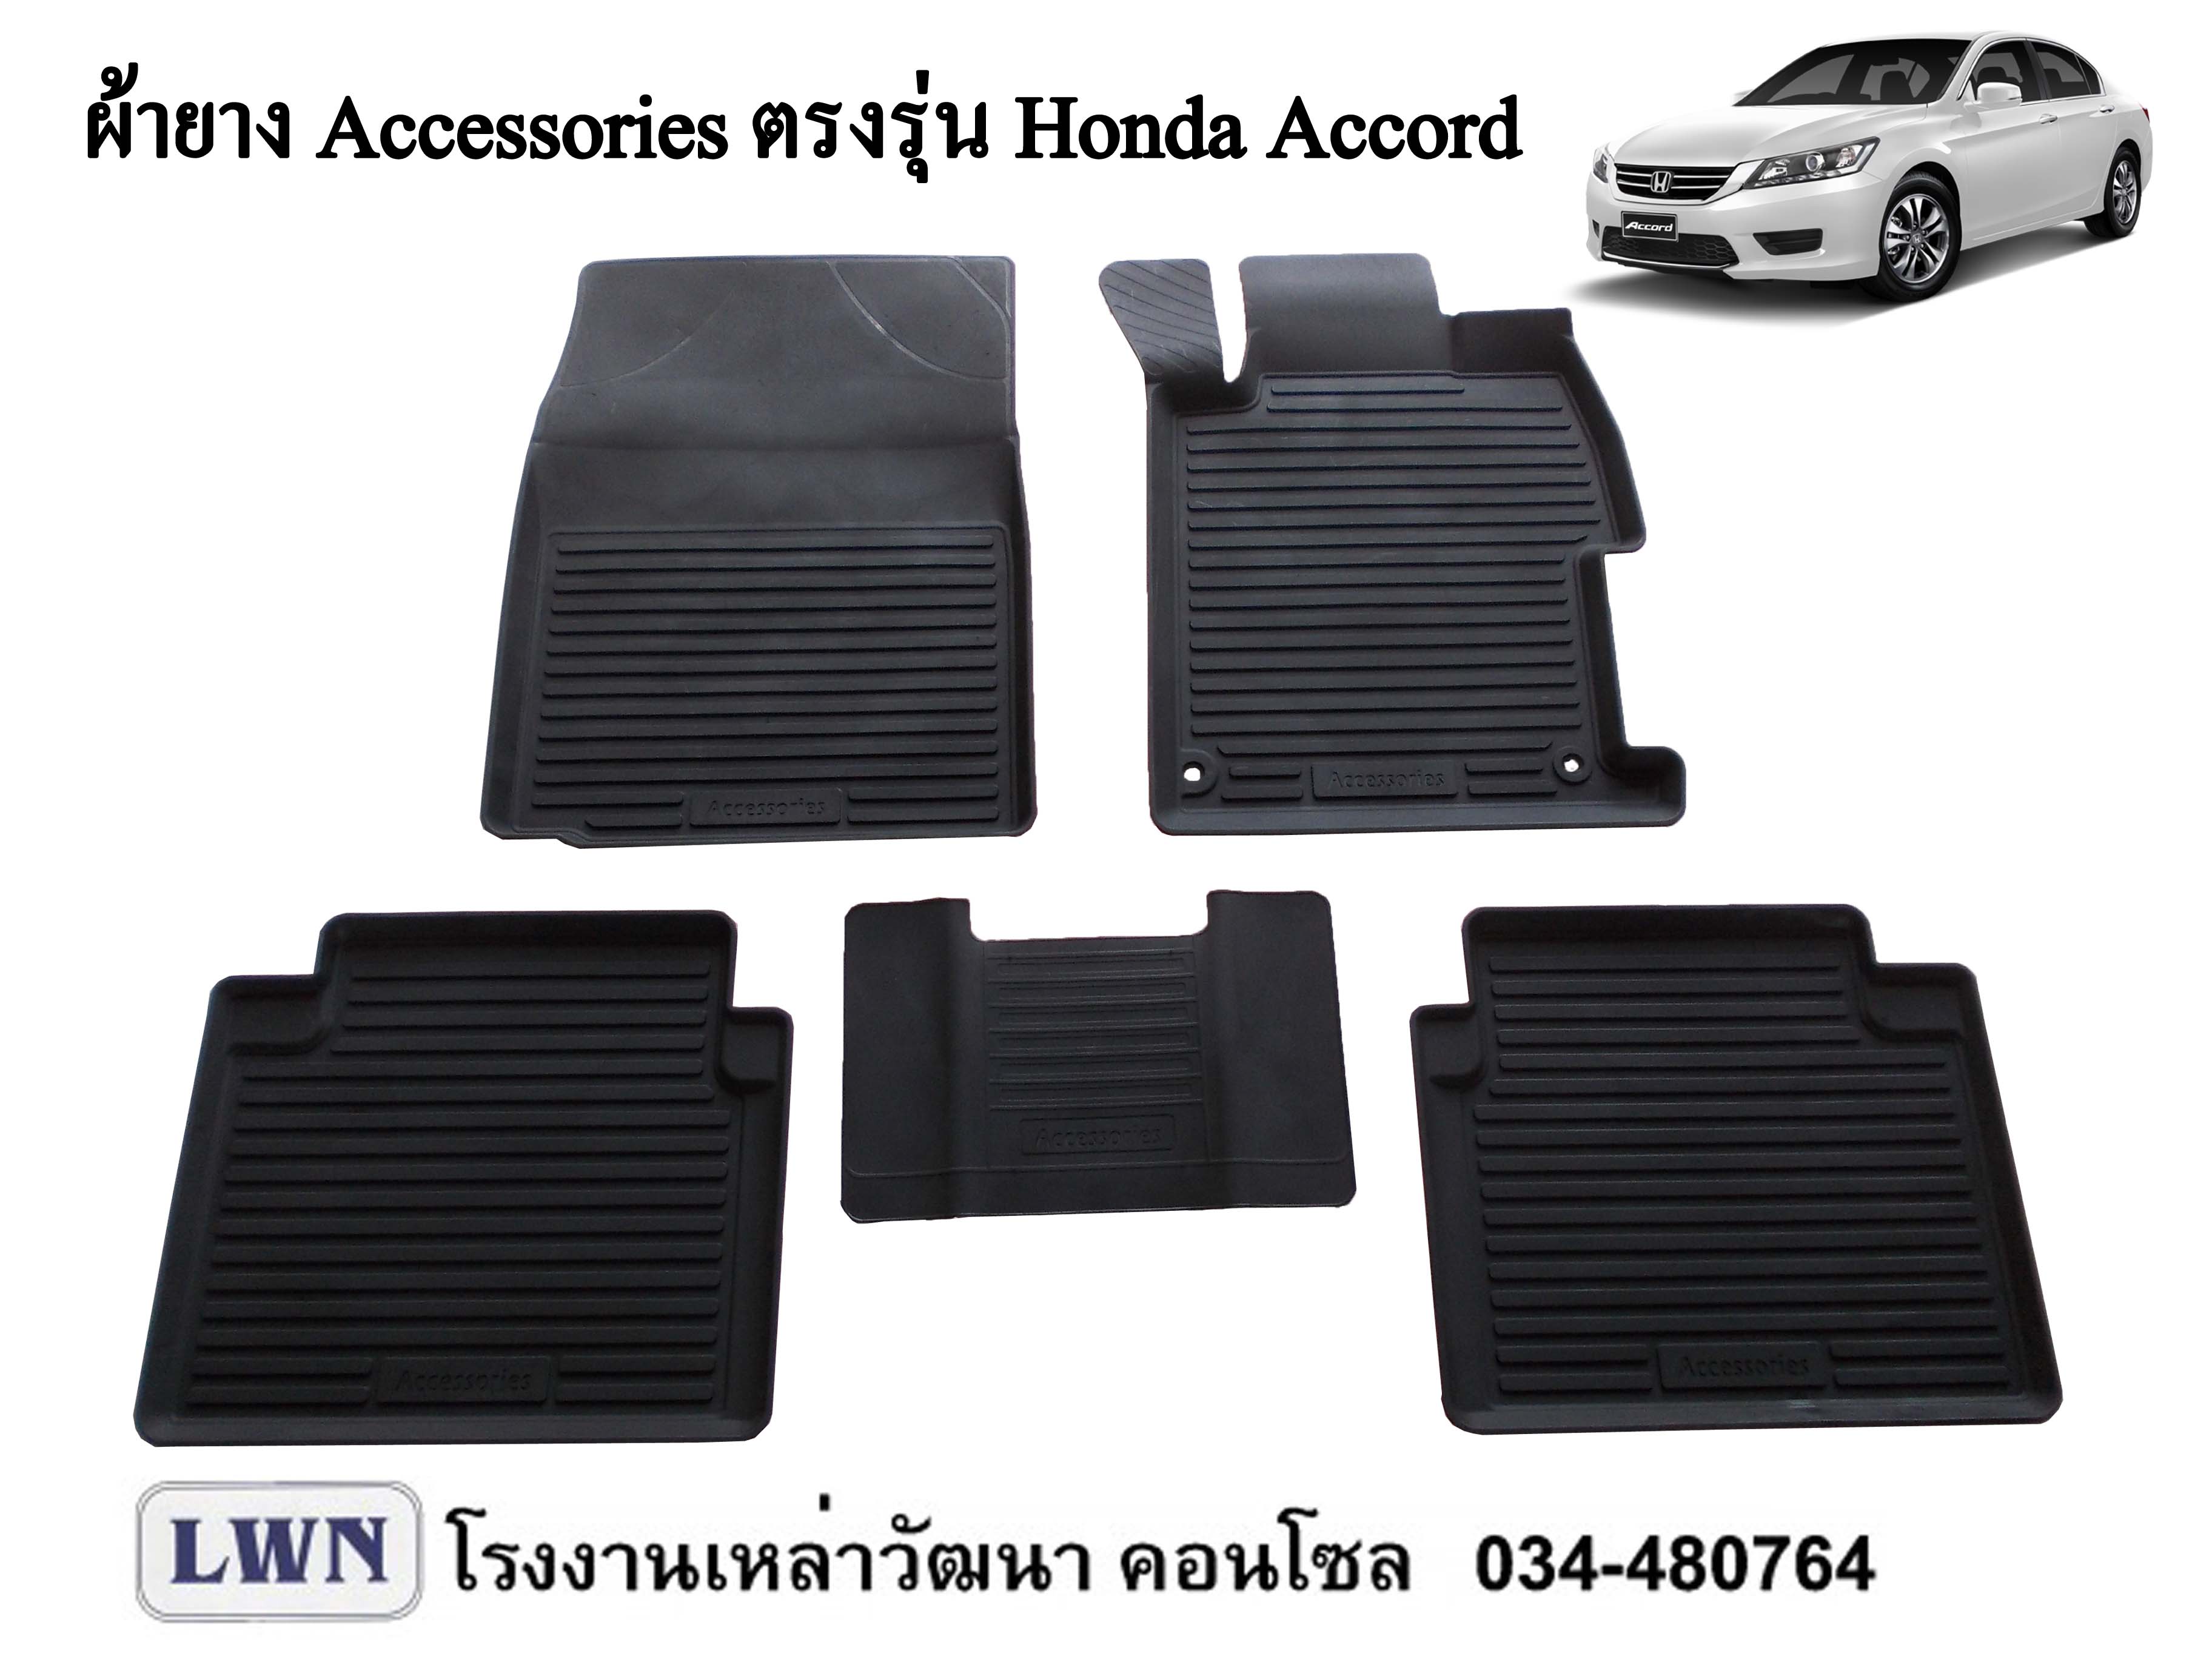 ACC-Honda Accord 2012-2014